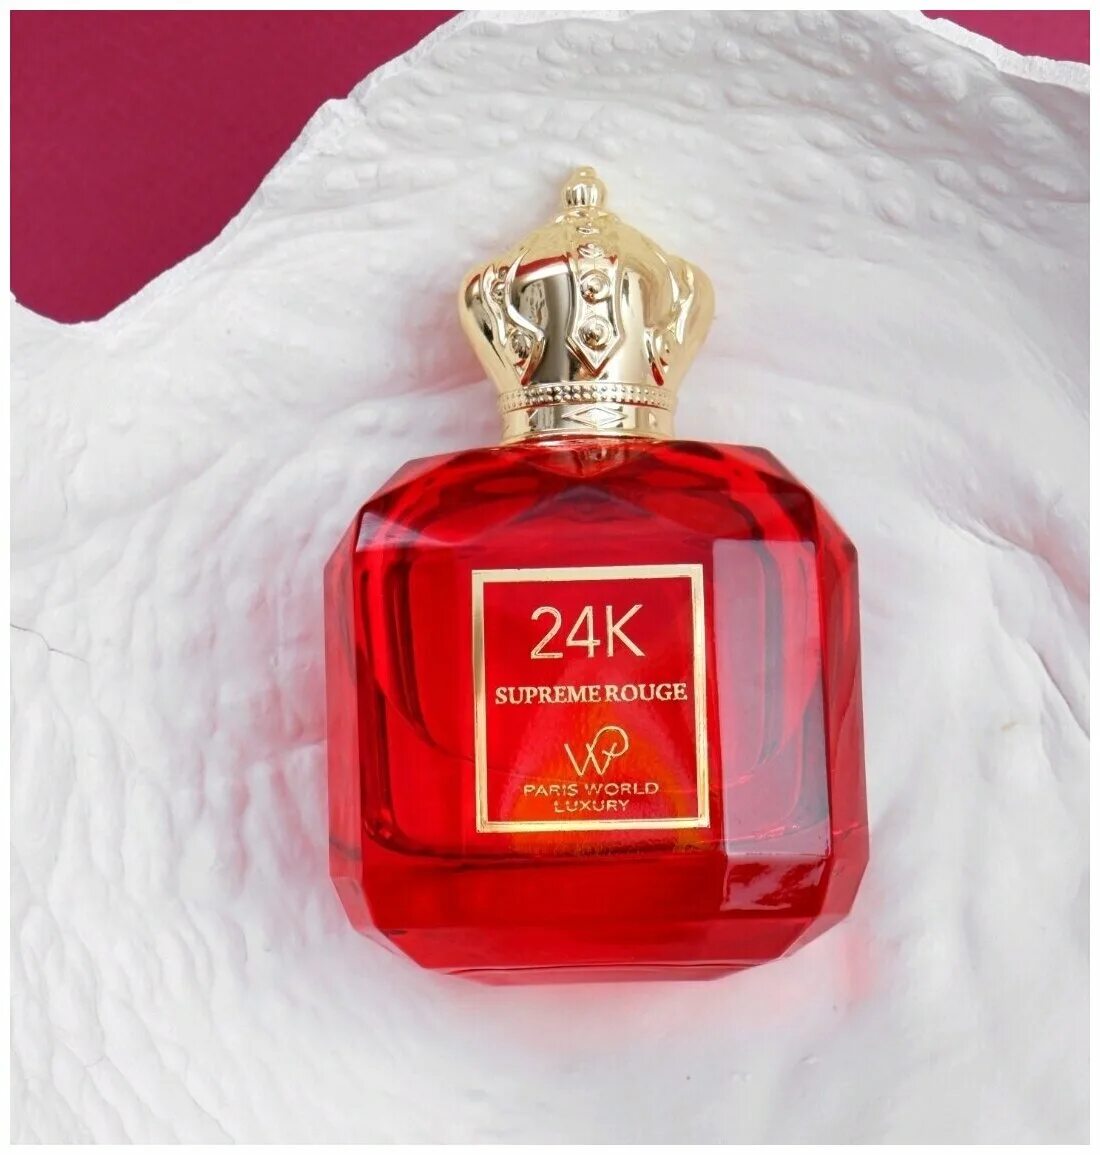 24k supreme rouge world luxury. Paris World Luxury 24k Supreme rouge. Духи Supreme rouge 24k. 24k Supreme rouge Парфюм. 24k Supreme rouge EDP.